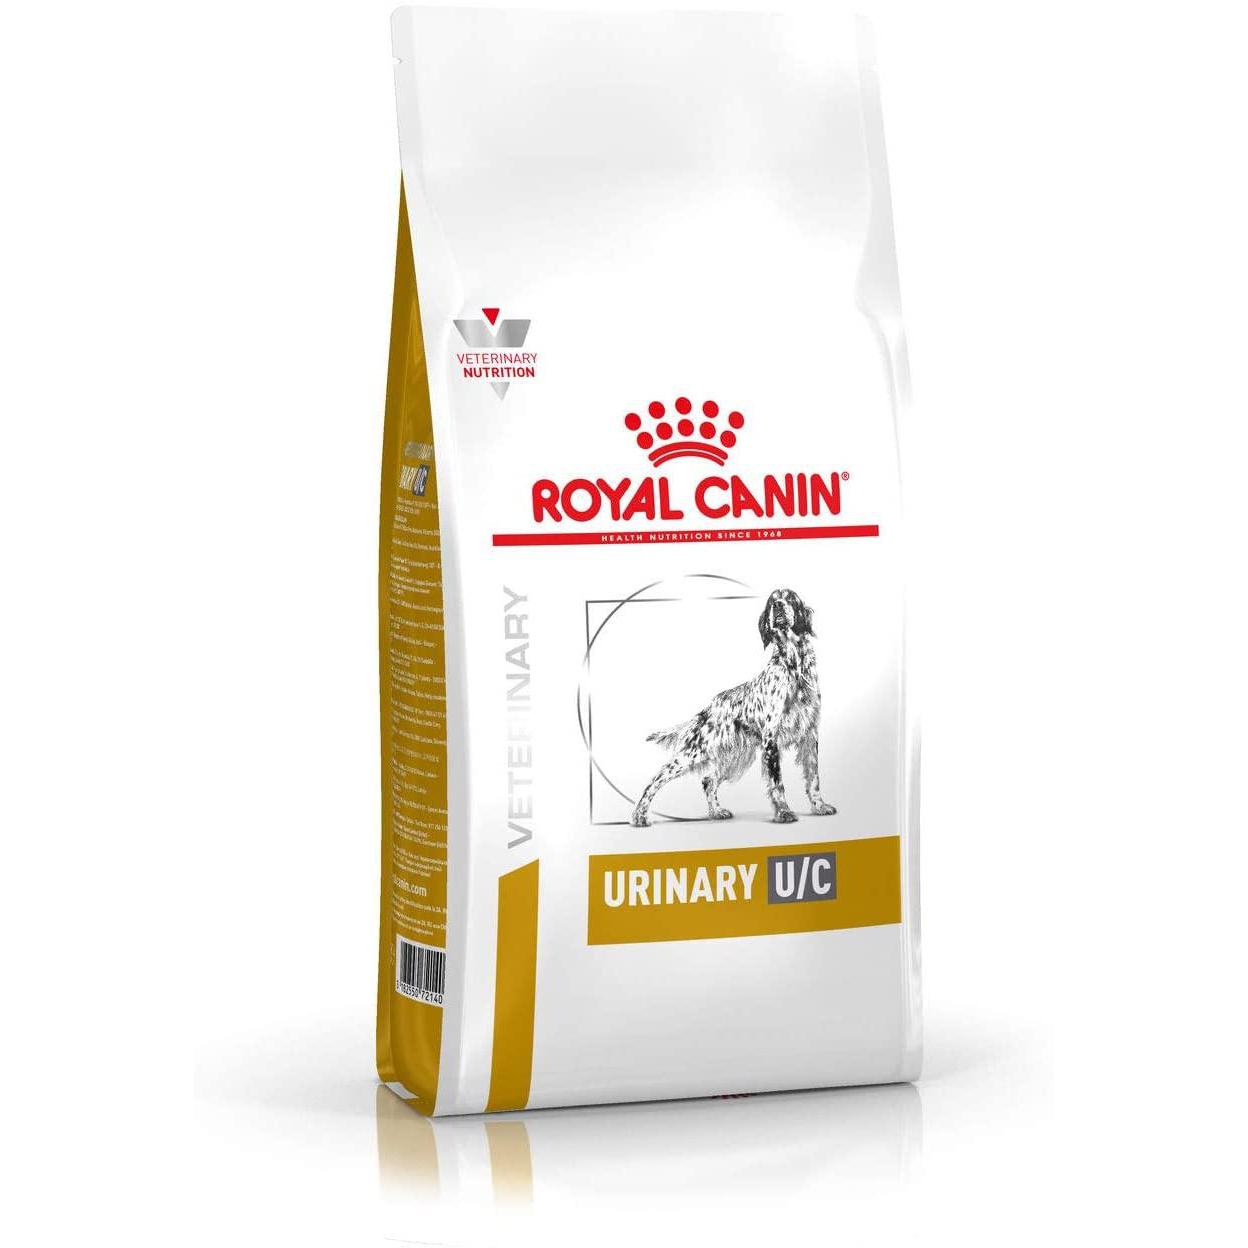 Royal Canin Urinay U/C Low Purine Veterinary 2kg Crocchette Cane